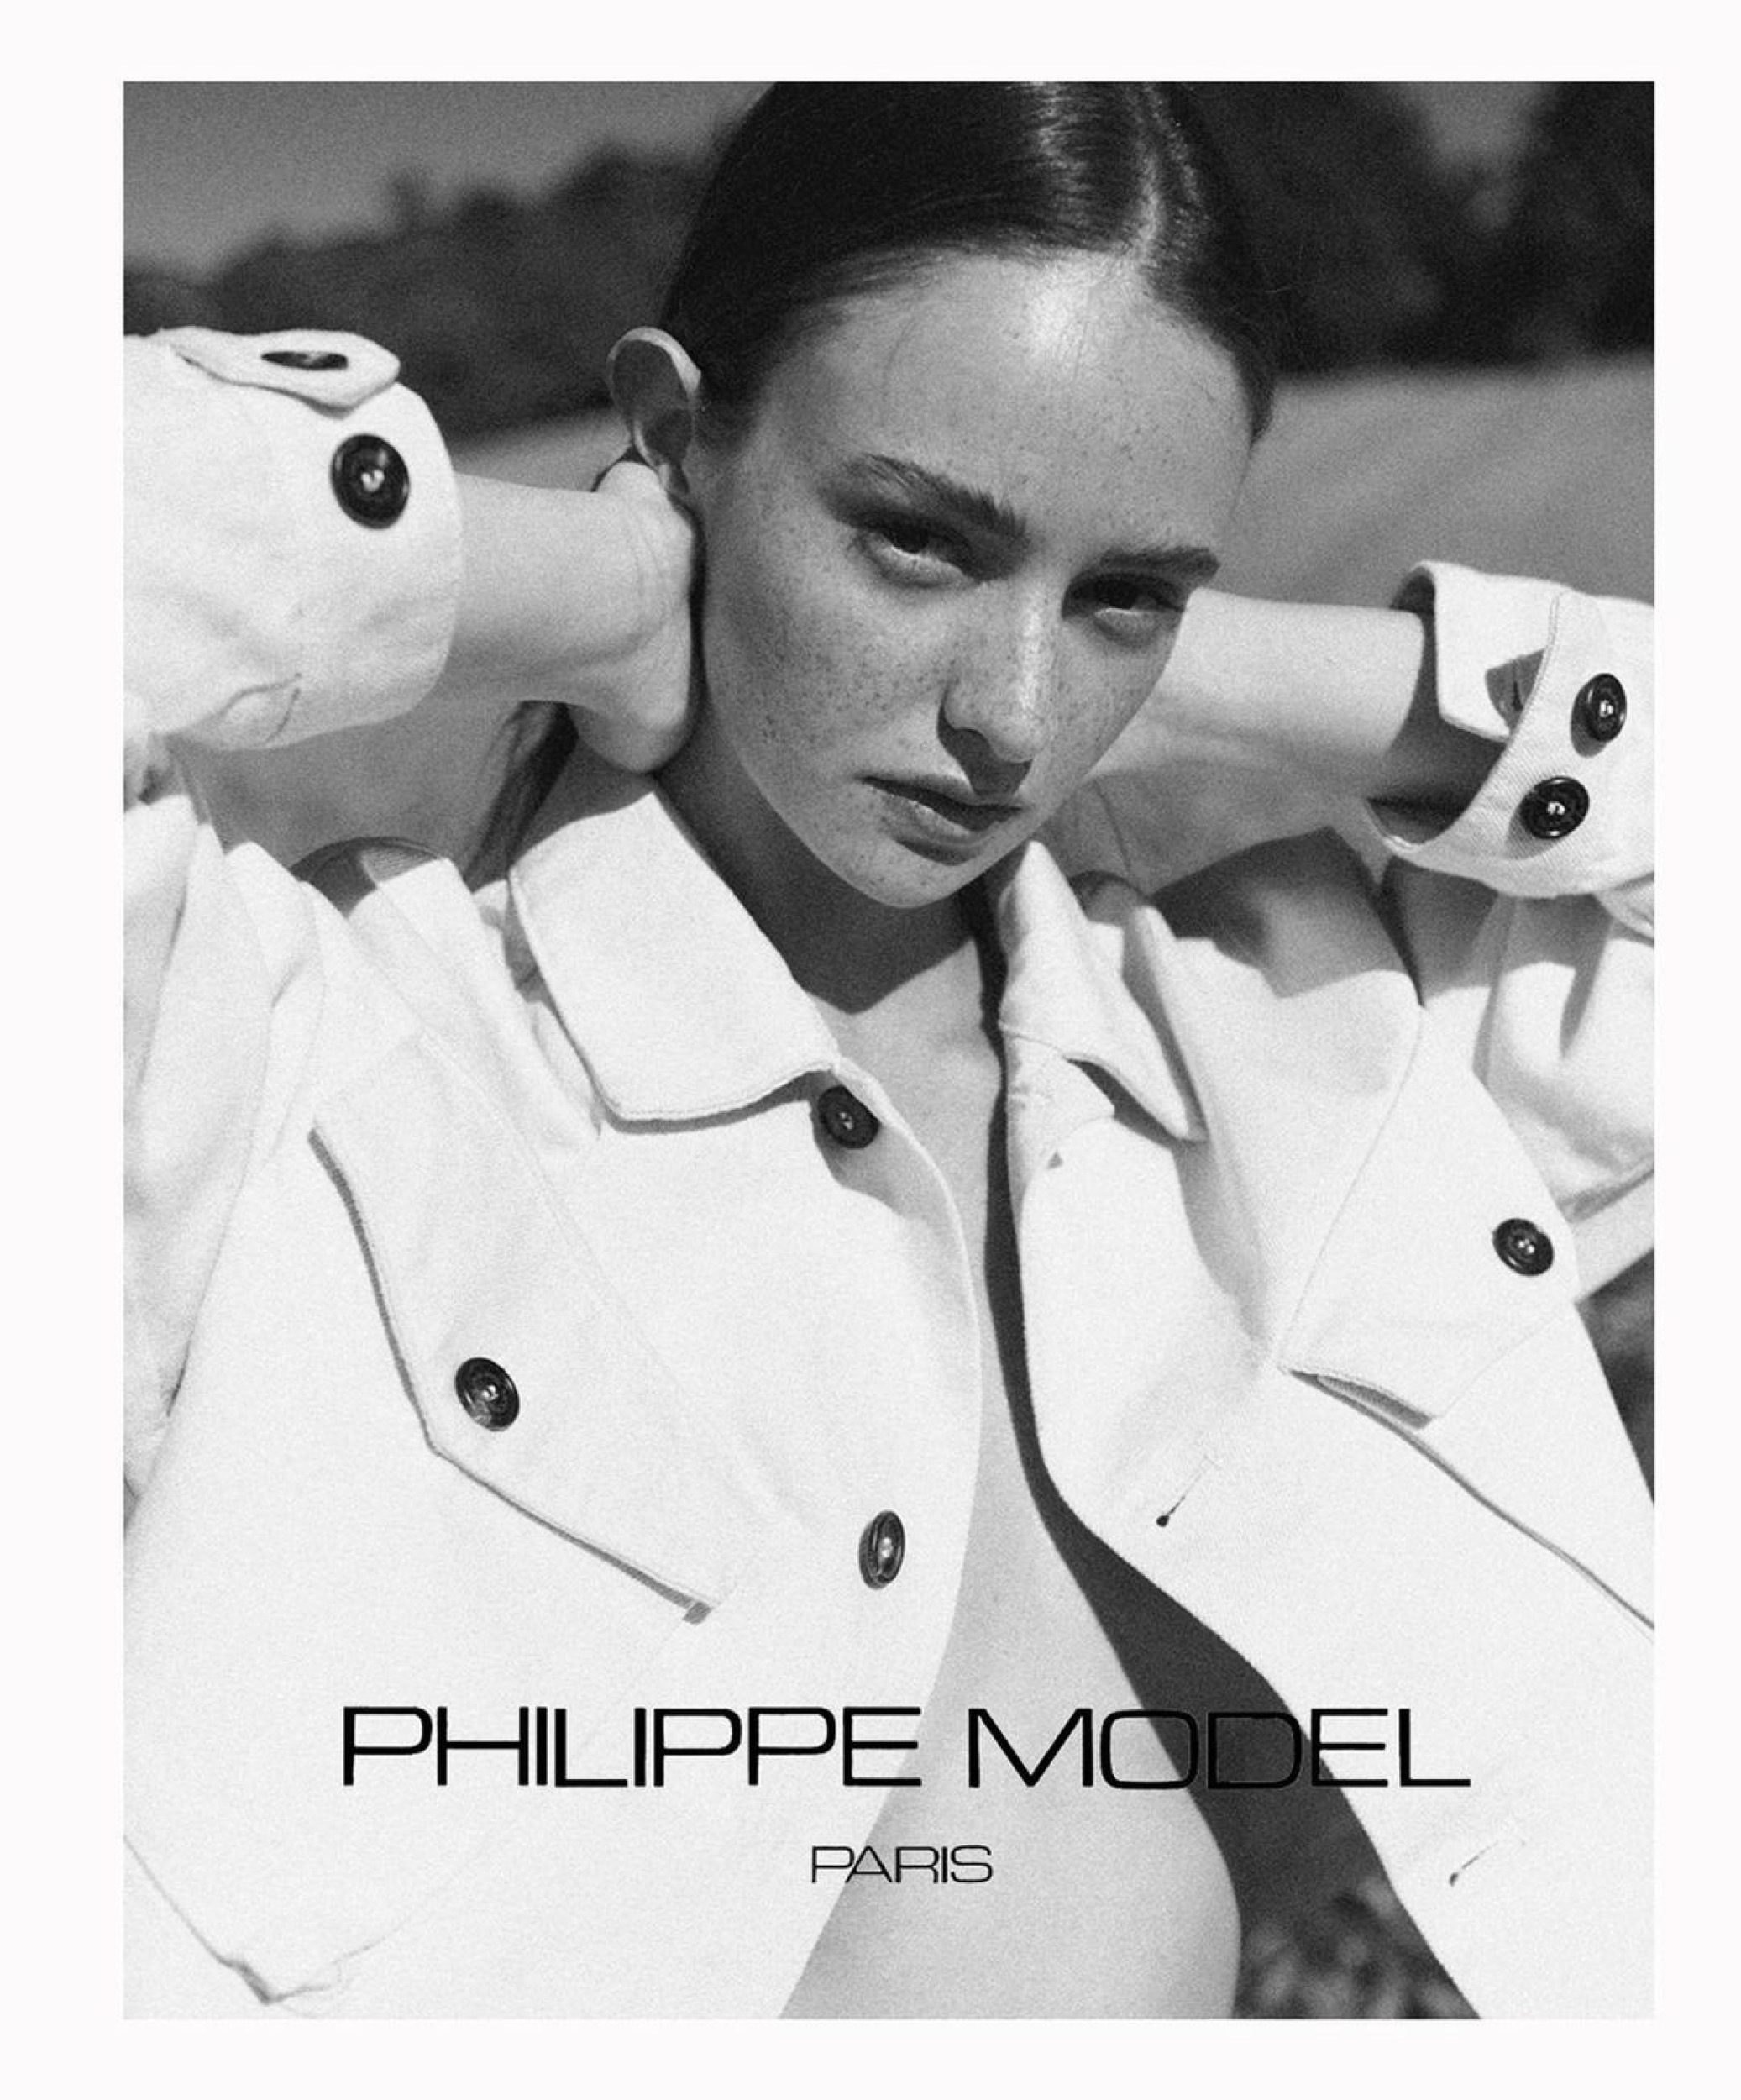 kathrin-hohberg-philippe-models-rocco-bizzarri-06